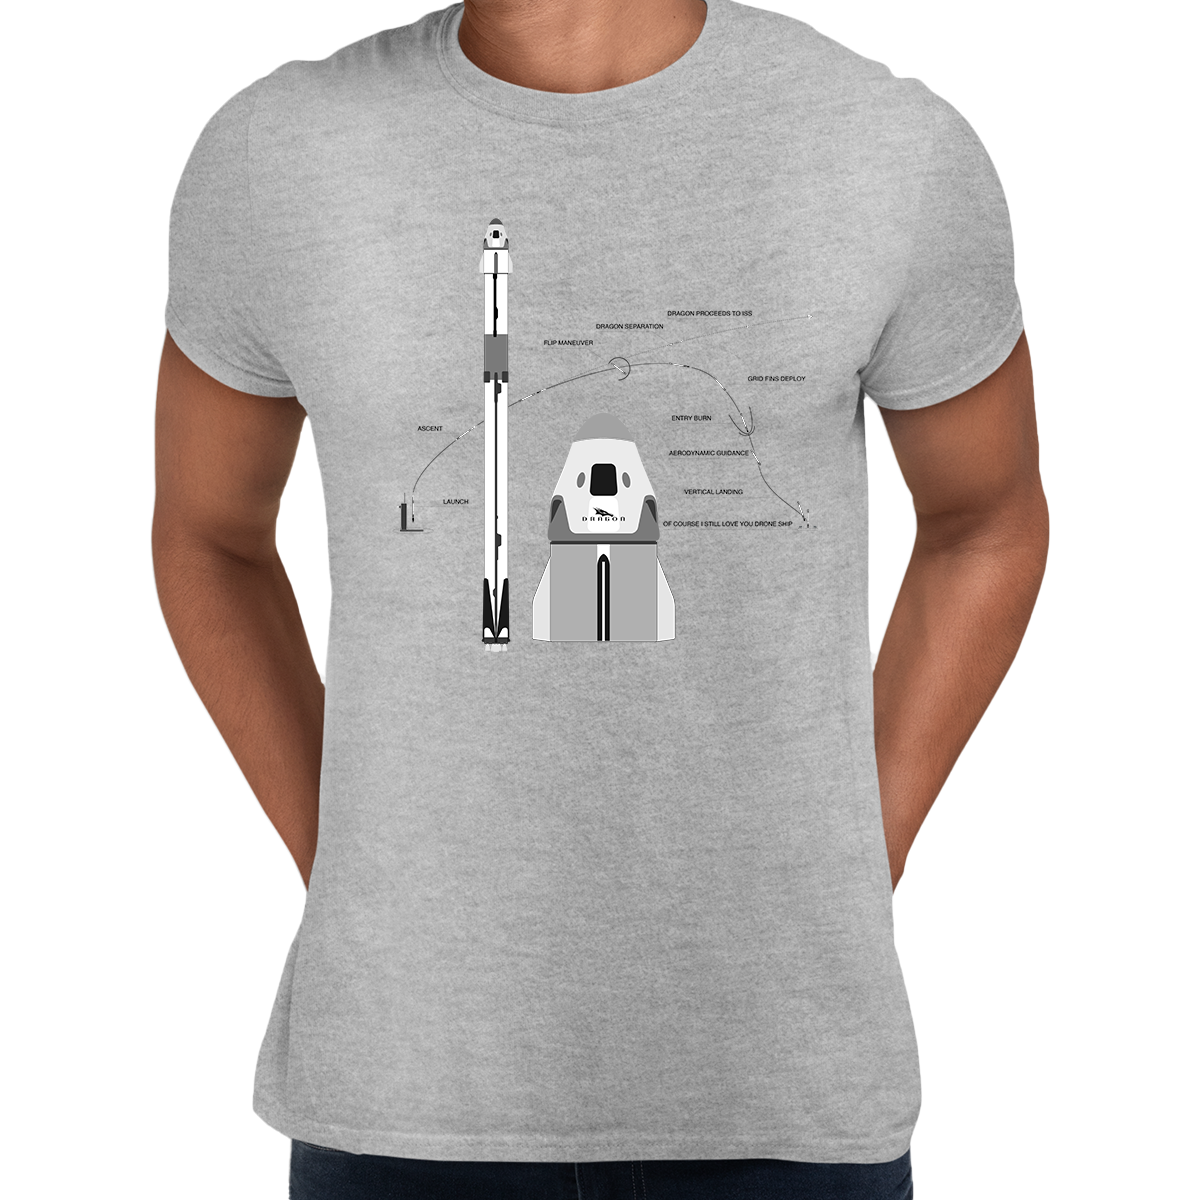 NASA SpaceX Falcon 9 Dragon Launch & Land - Black T-shirt for Space Geeks 2020 - Kuzi Tees